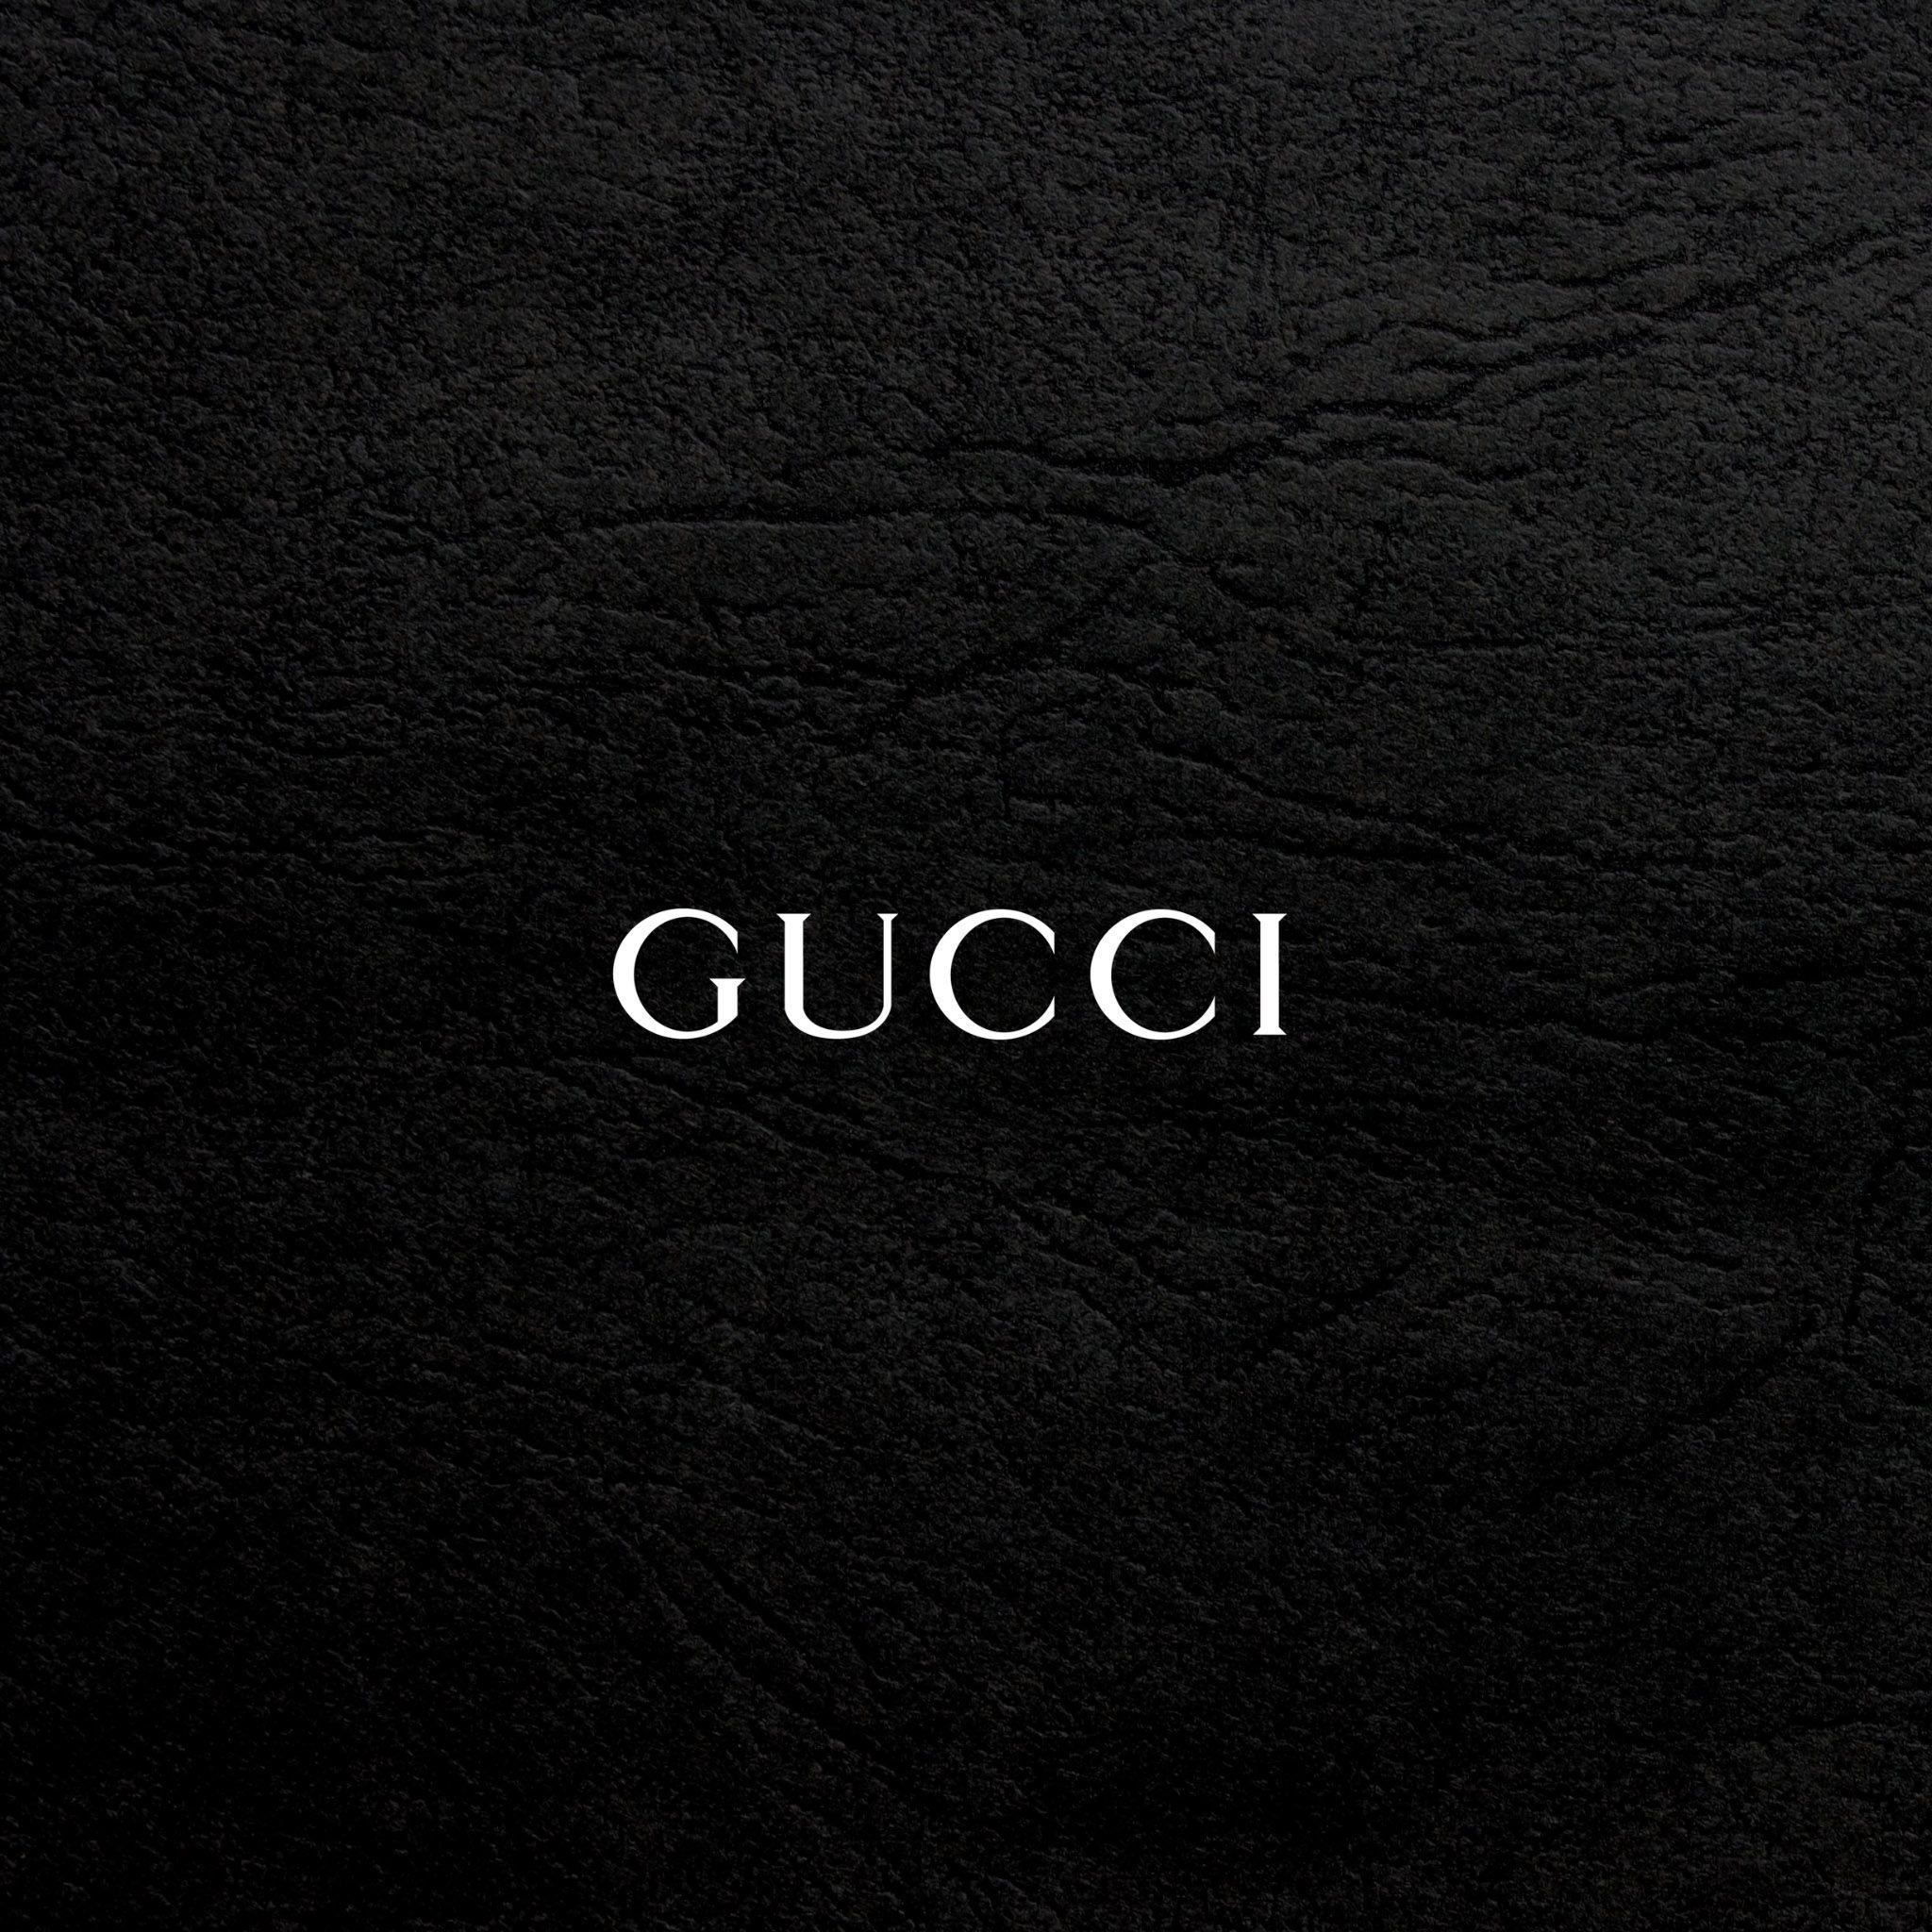 Gucci Ipad Wallpapers - Top Free Gucci Ipad Backgrounds - WallpaperAccess